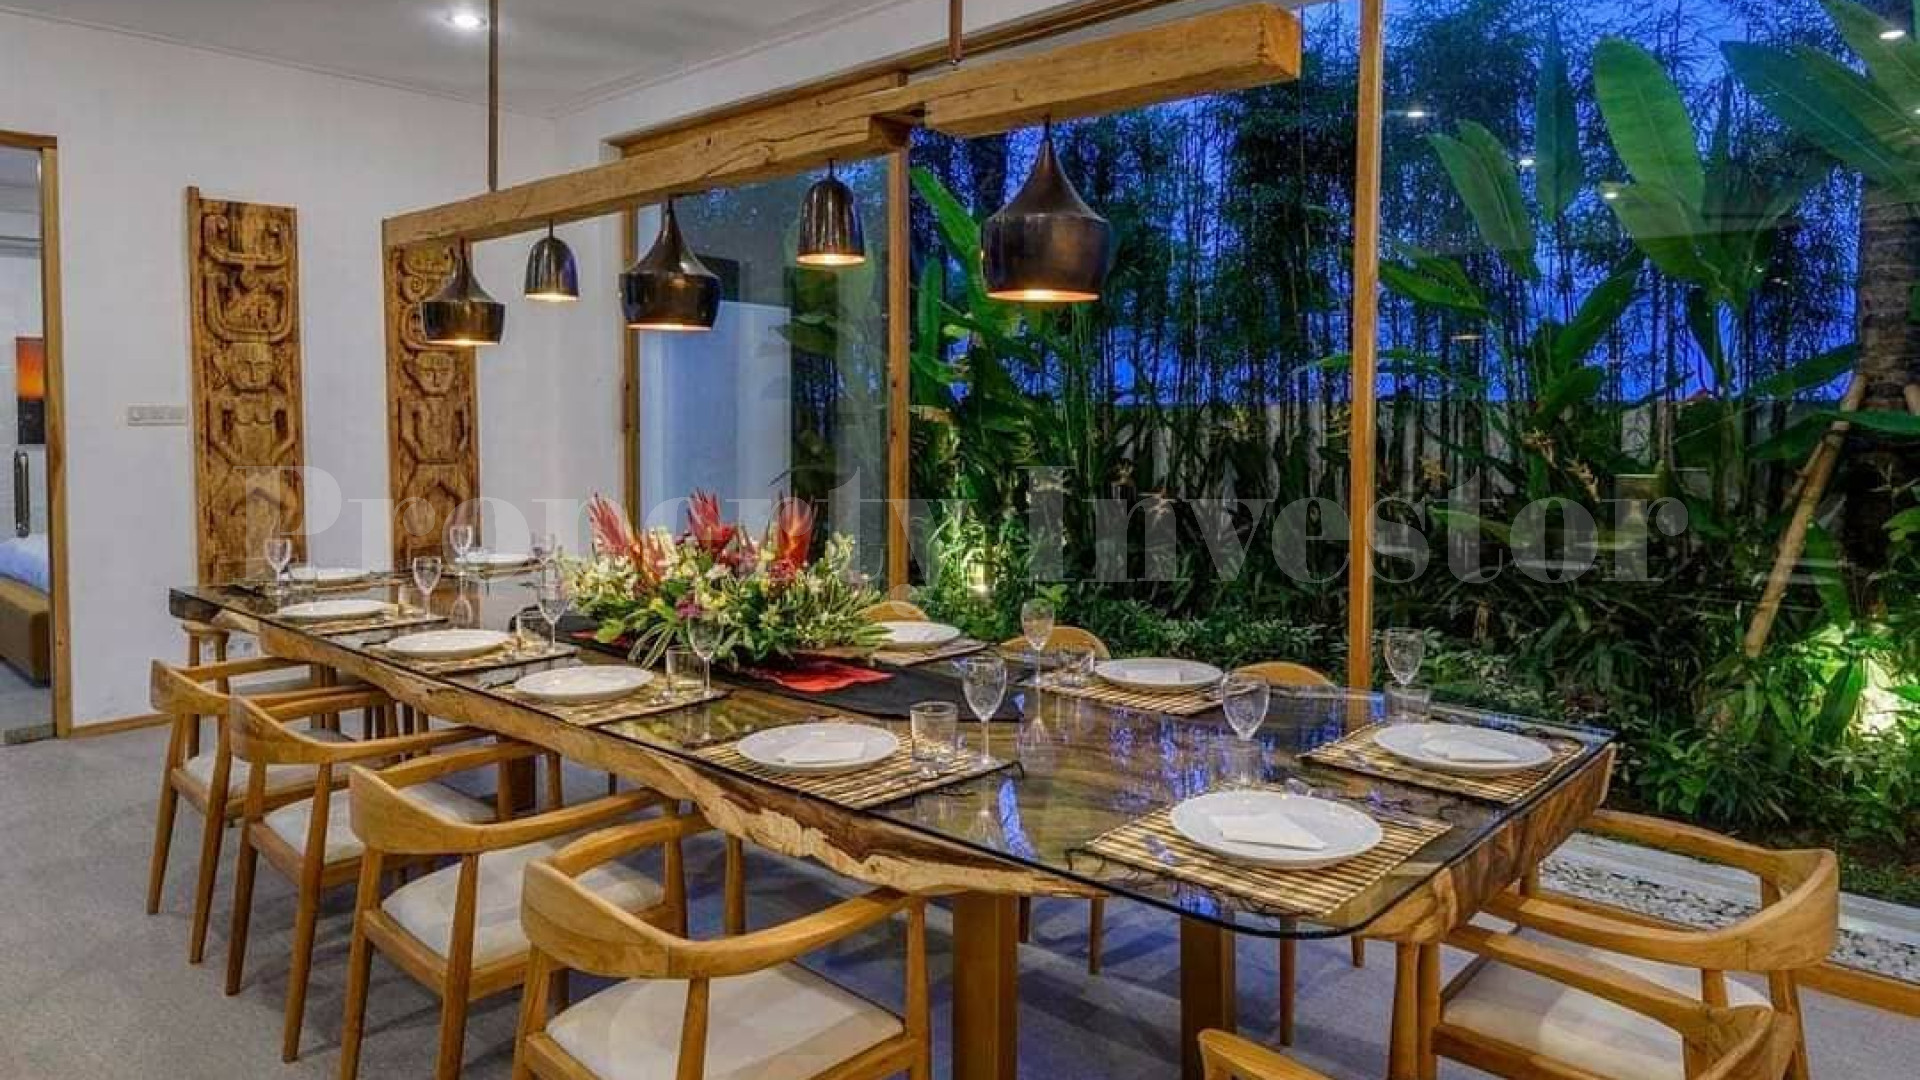 Elegant 5 Bedroom Contemporary Gated Community Villa for Sale in Canggu, Bali